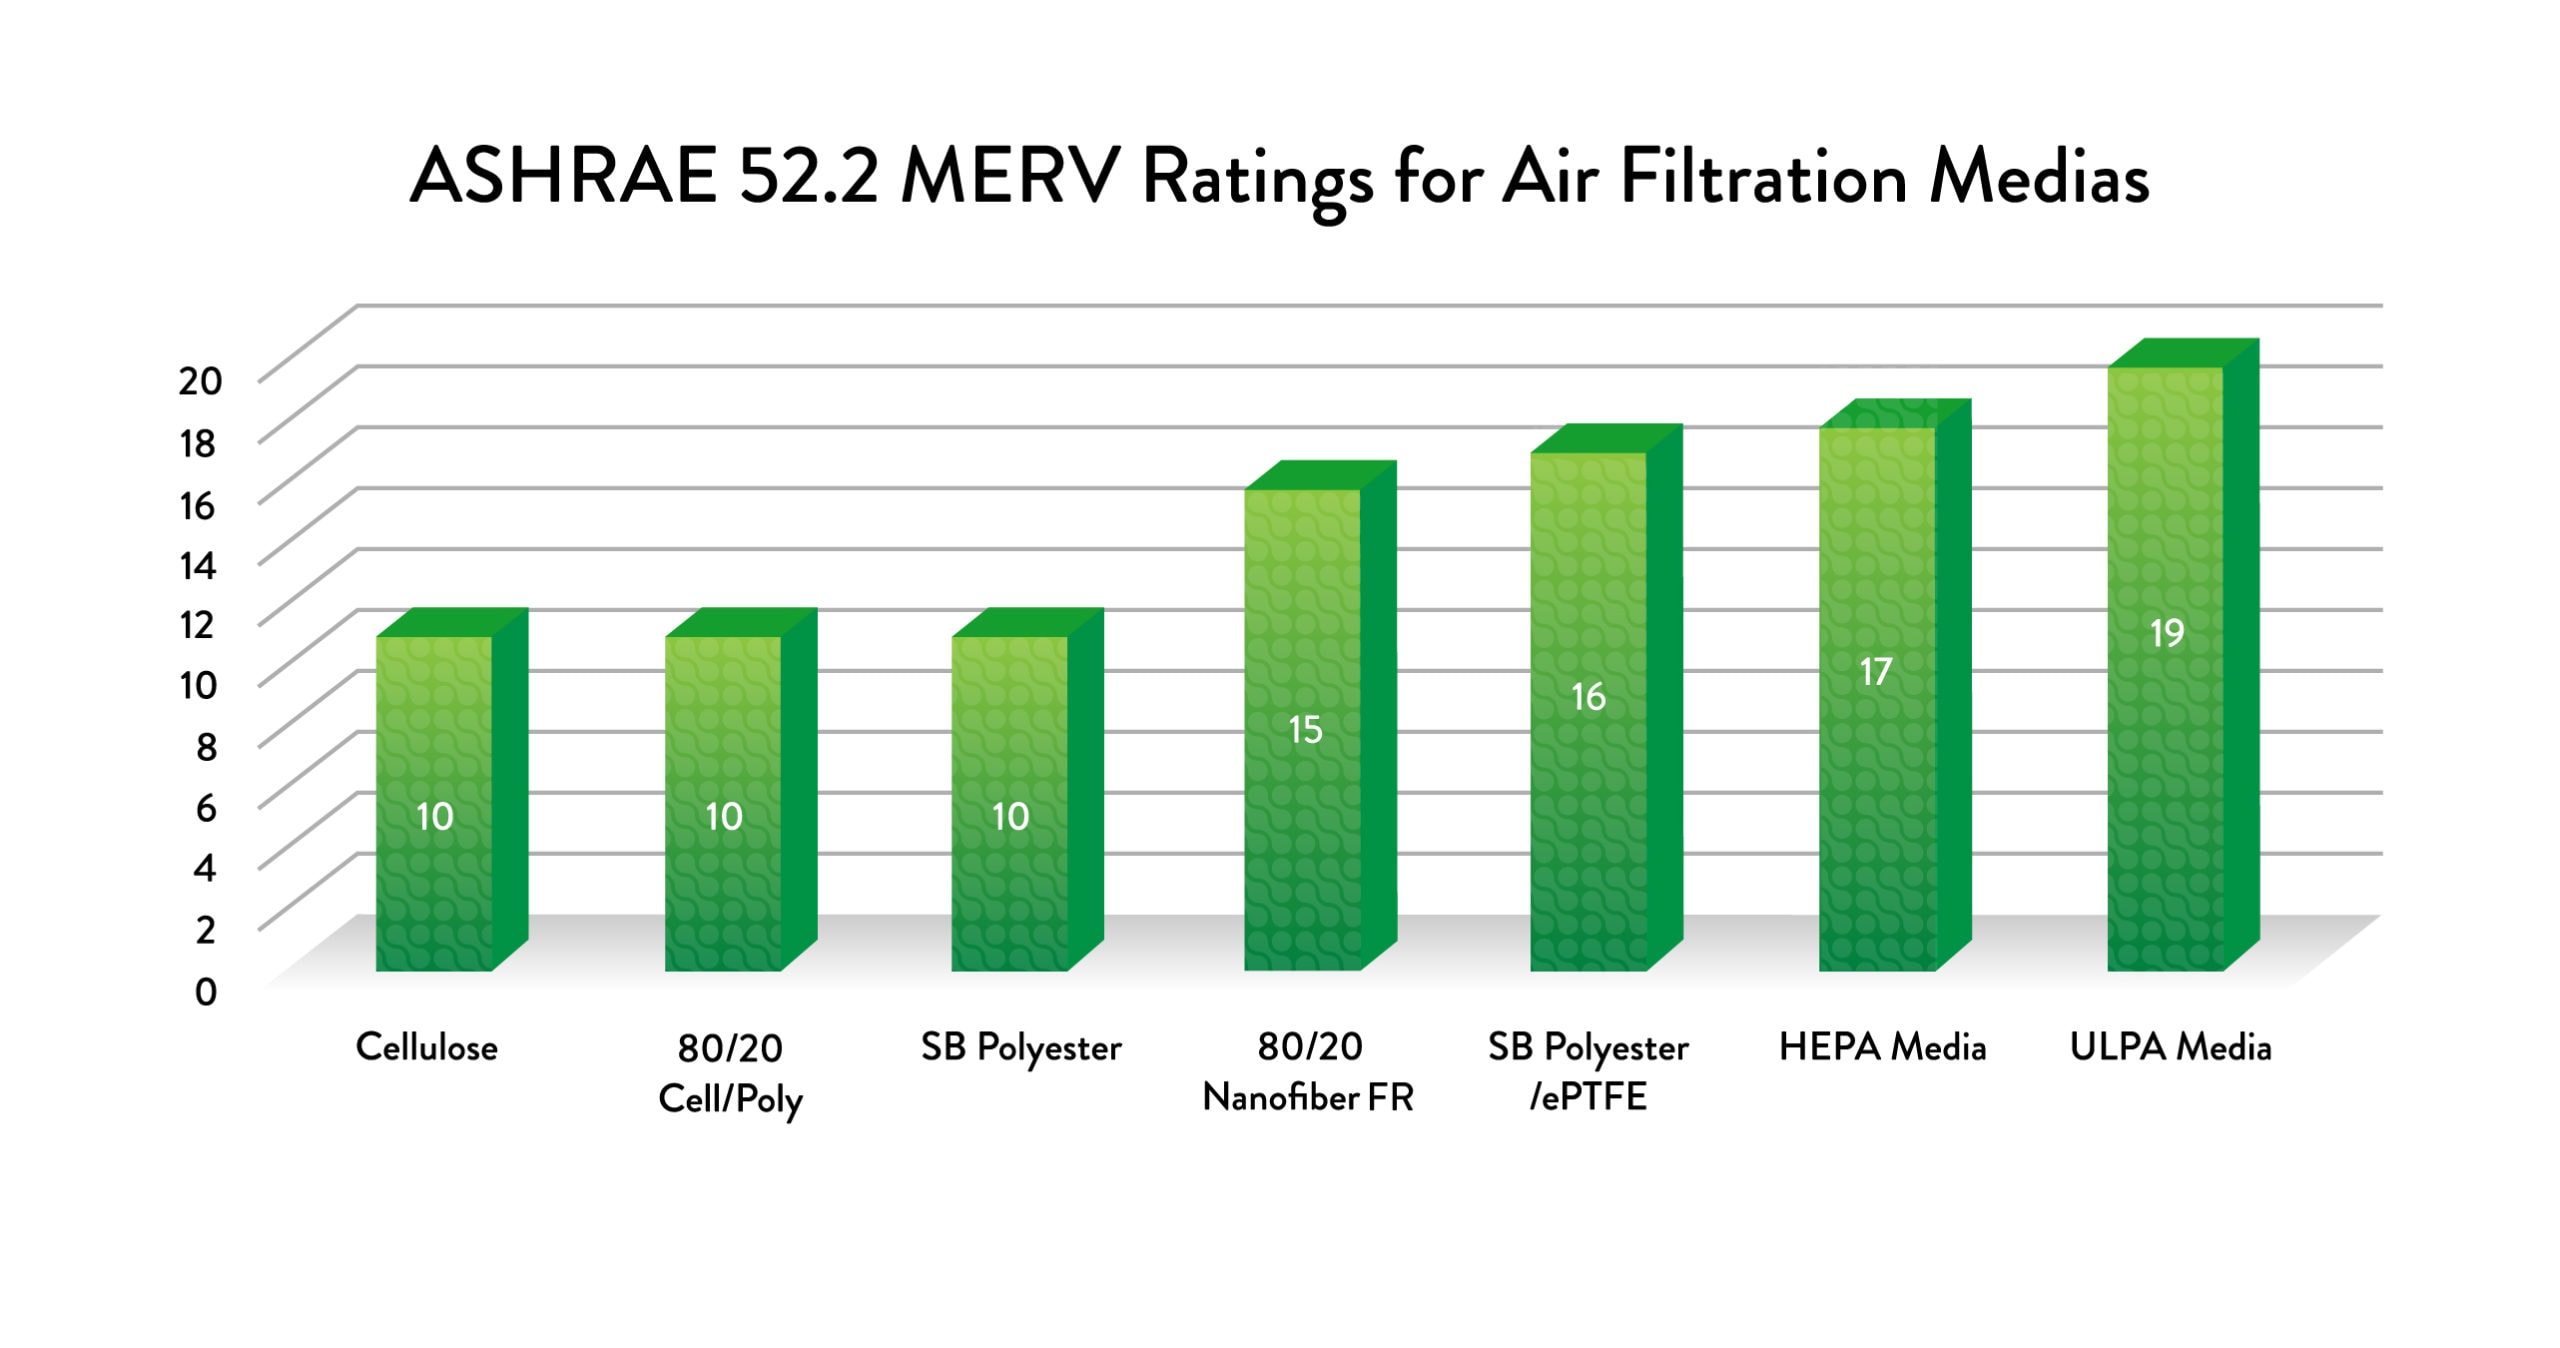 ASHRAE 52.2 MERV Ratings for Air Filtration Medias